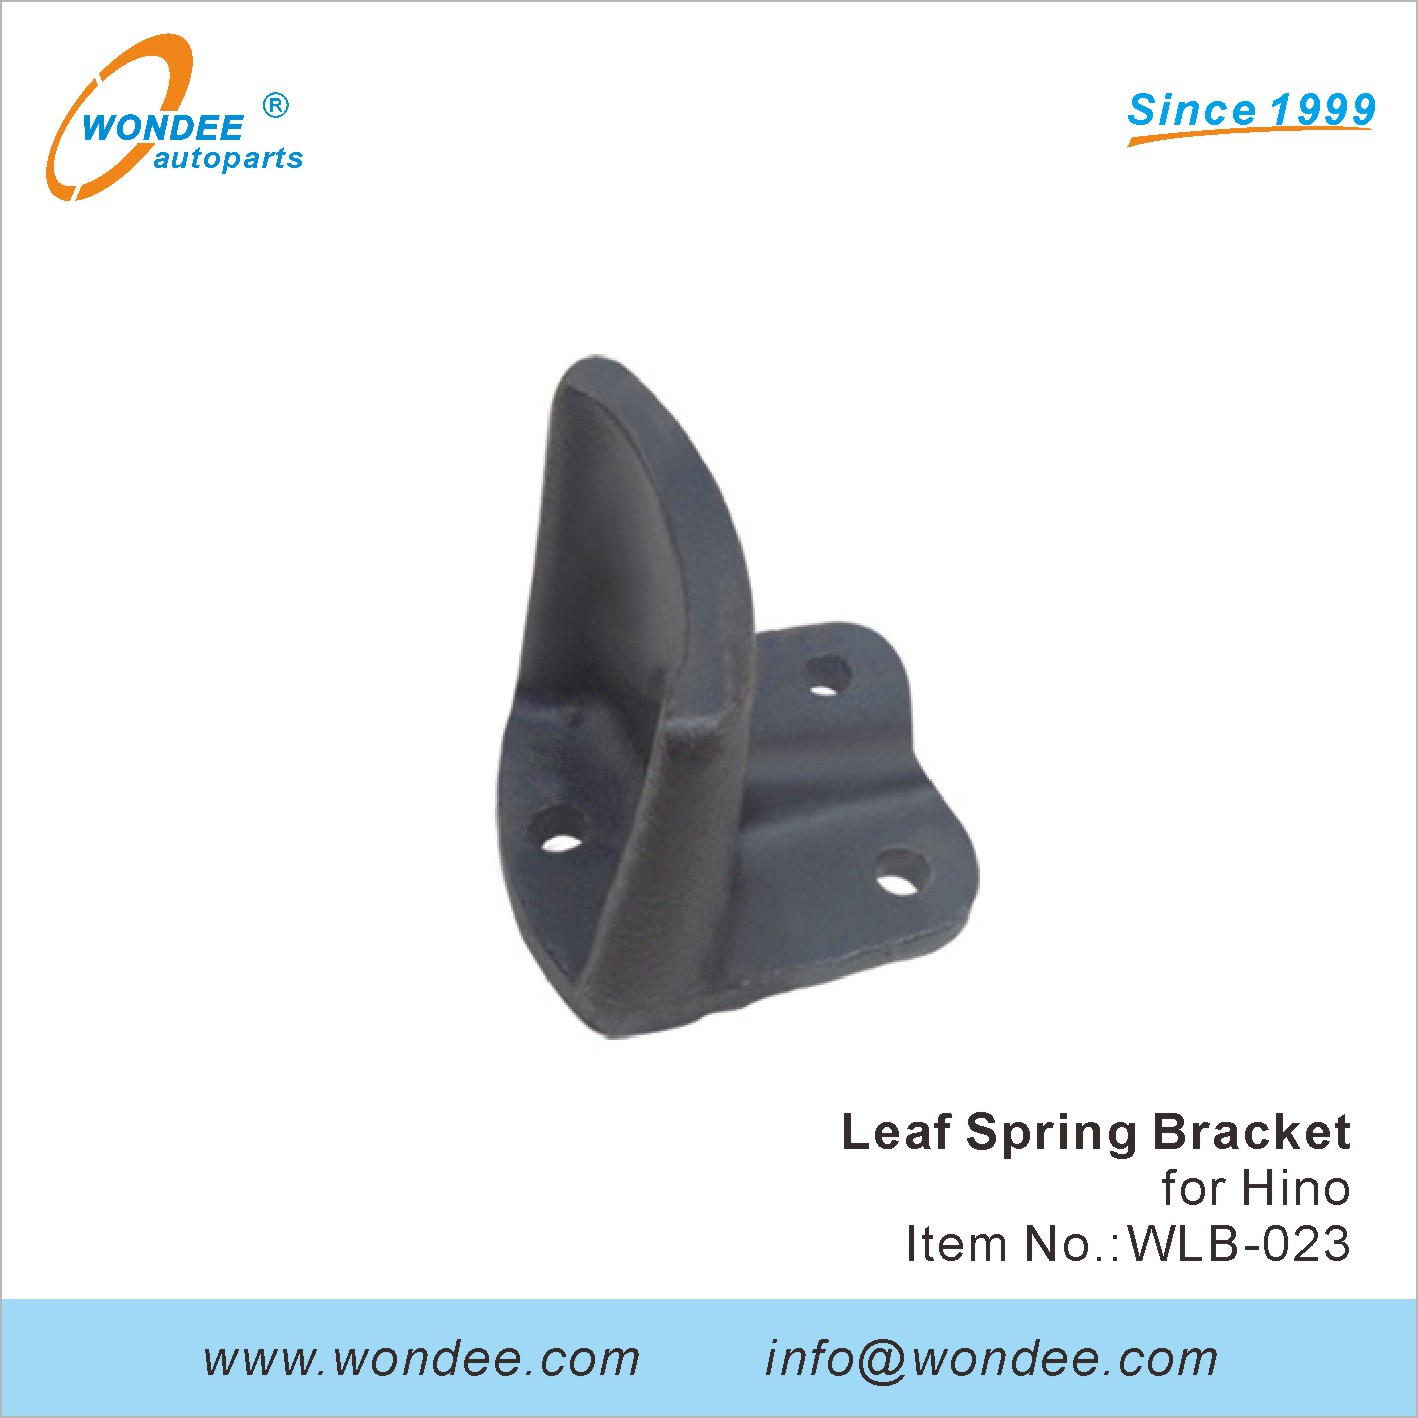 WONDEE leaf spring bracket (23)